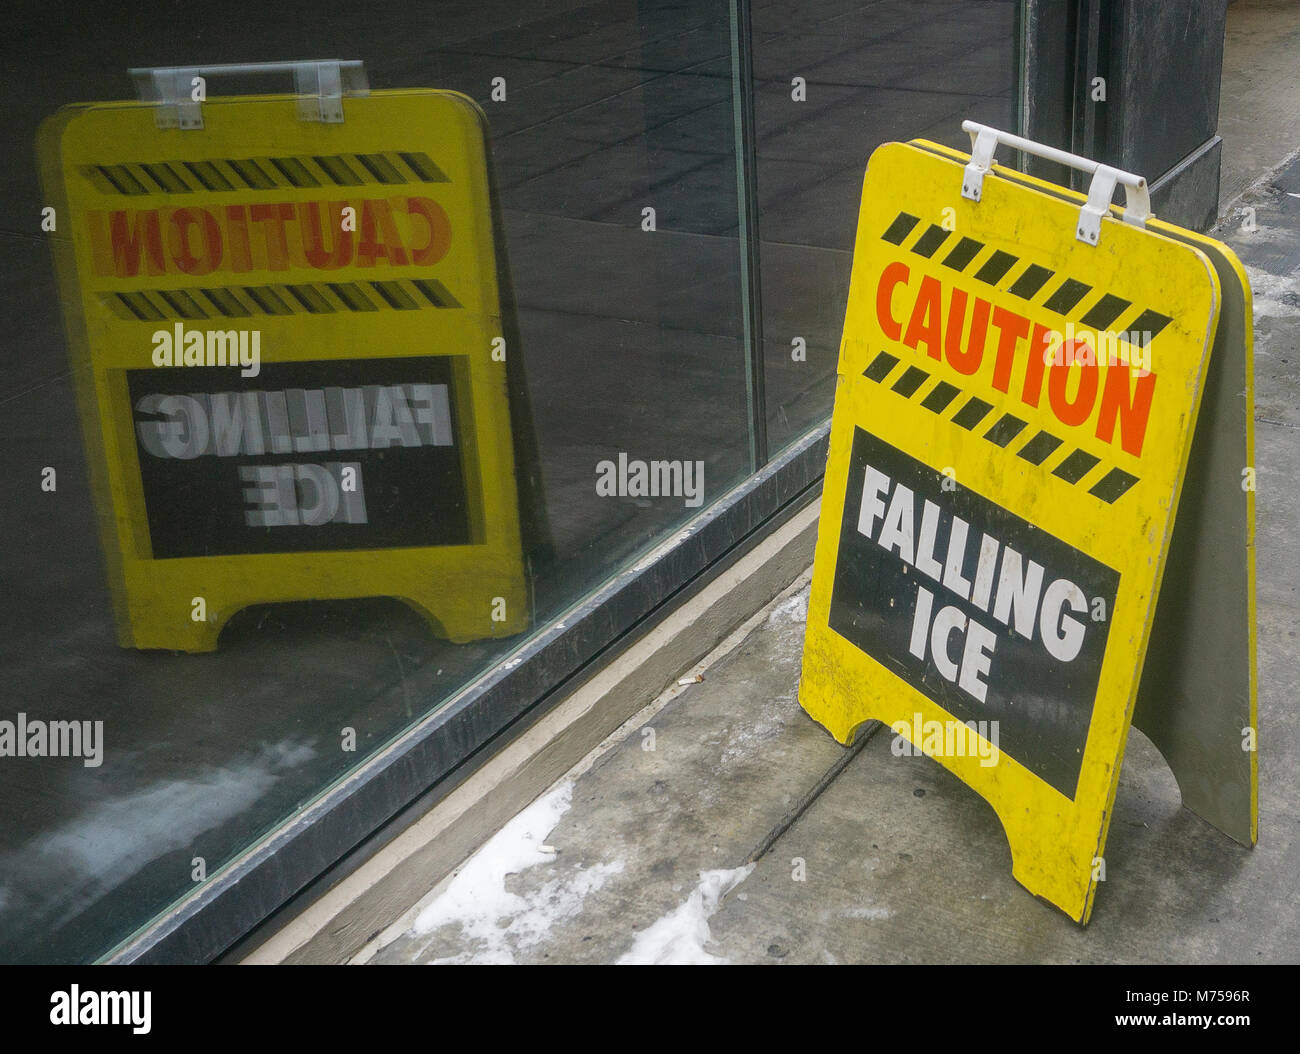 Falling ice sign Calgary Alberta Canada Stock Photo